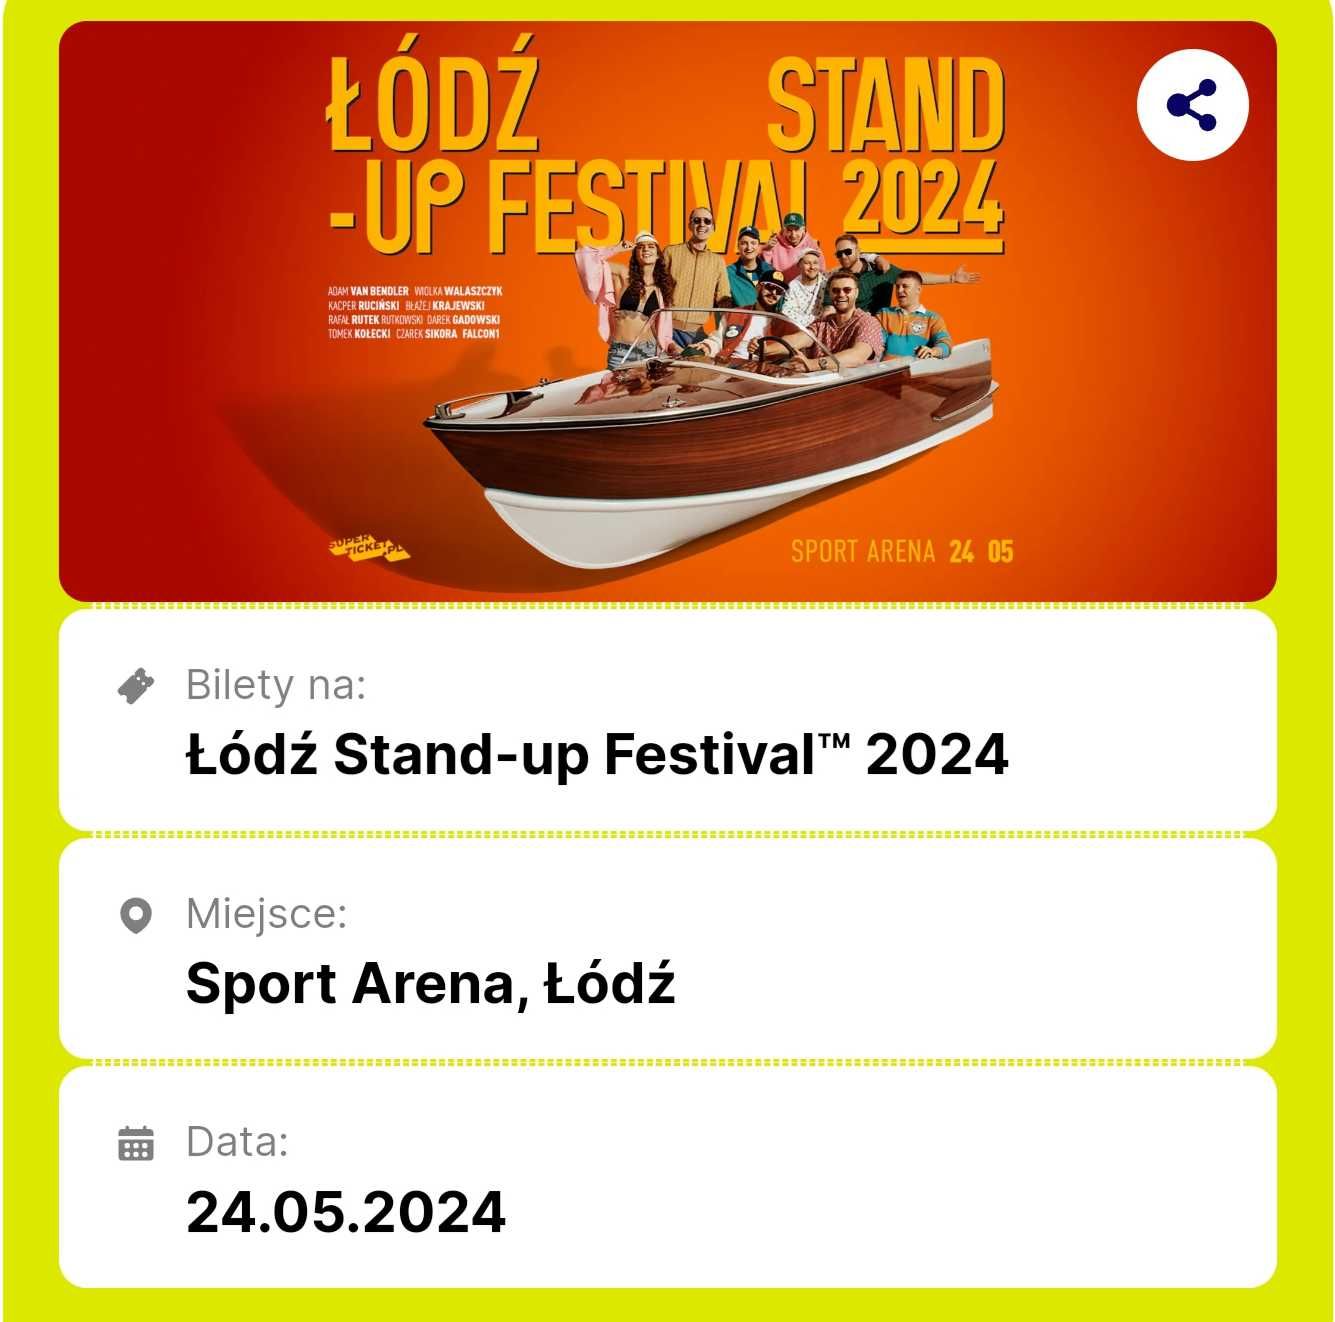 2 Bilety Standup Festival Łódź 24.05.2024 (idealne dla par)